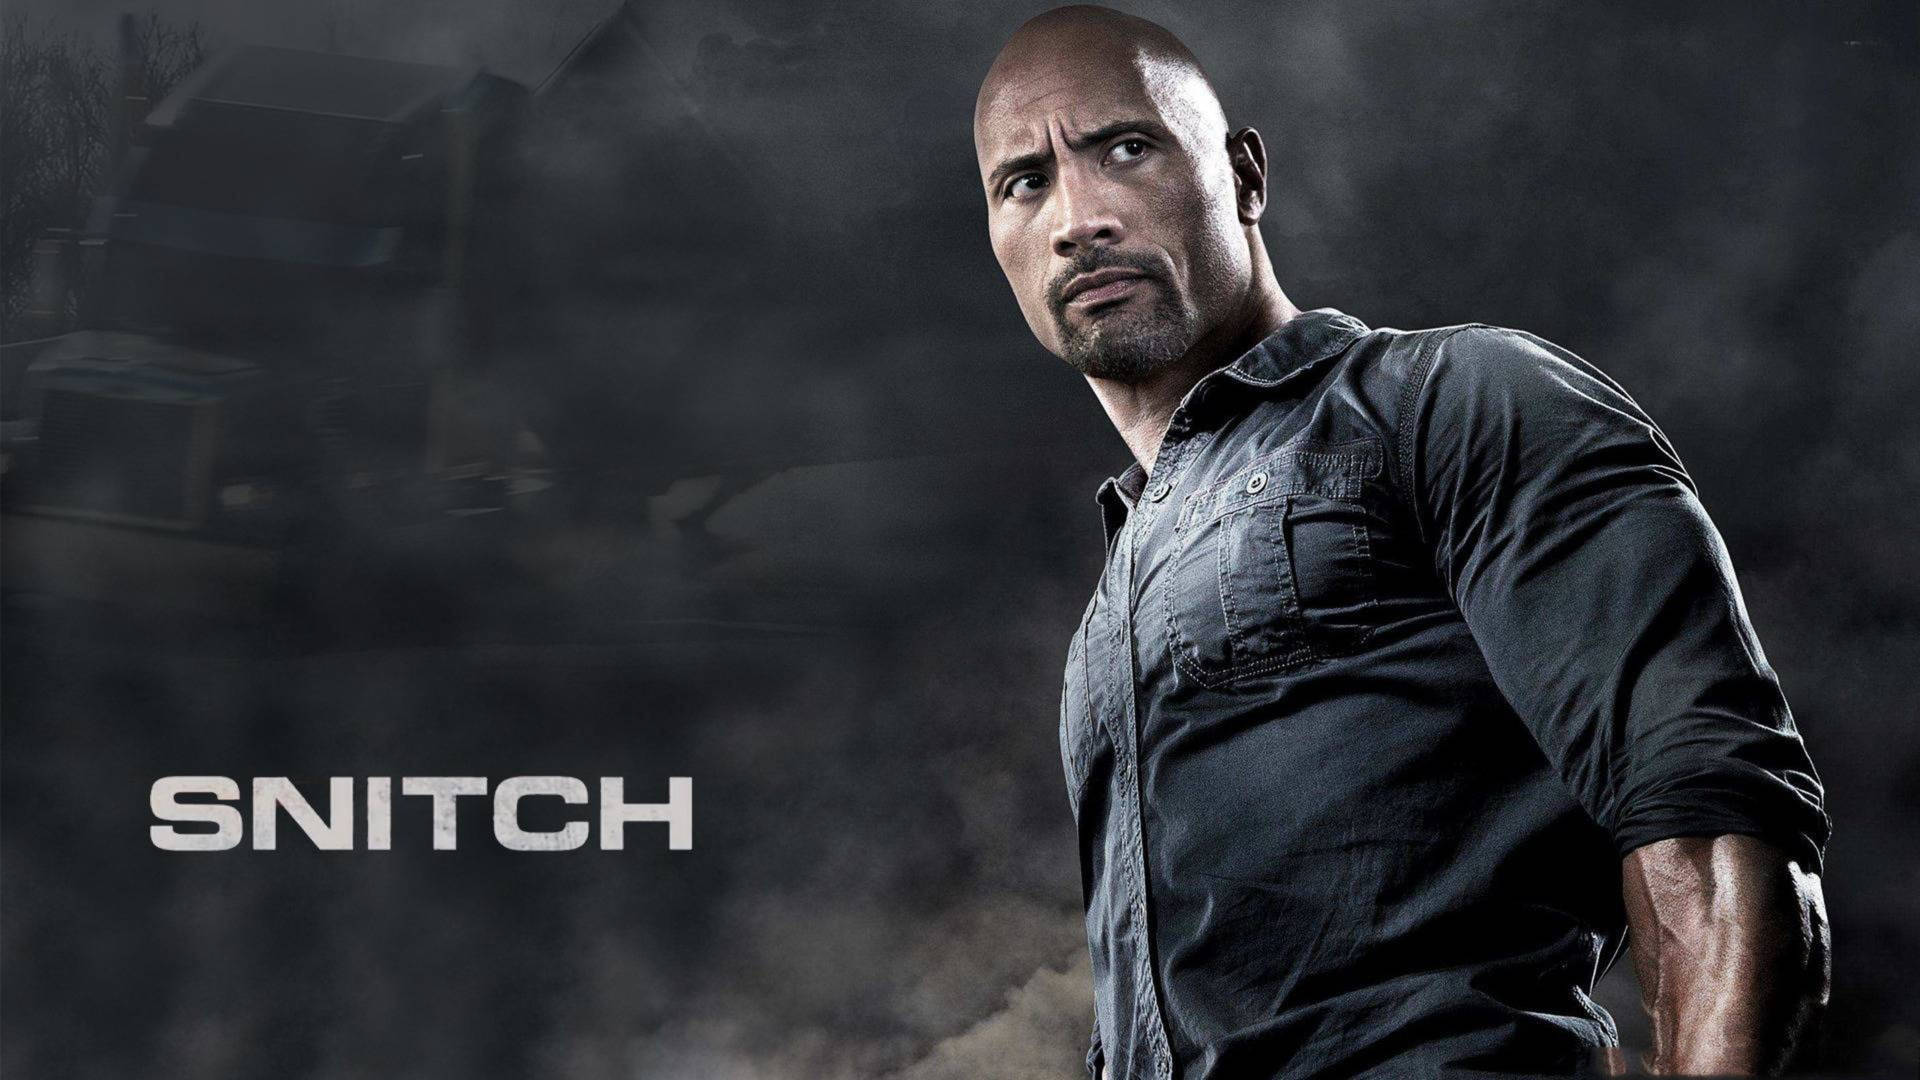 Dwayne Johnson Powerfully Intense In Snitch Movie Poster.